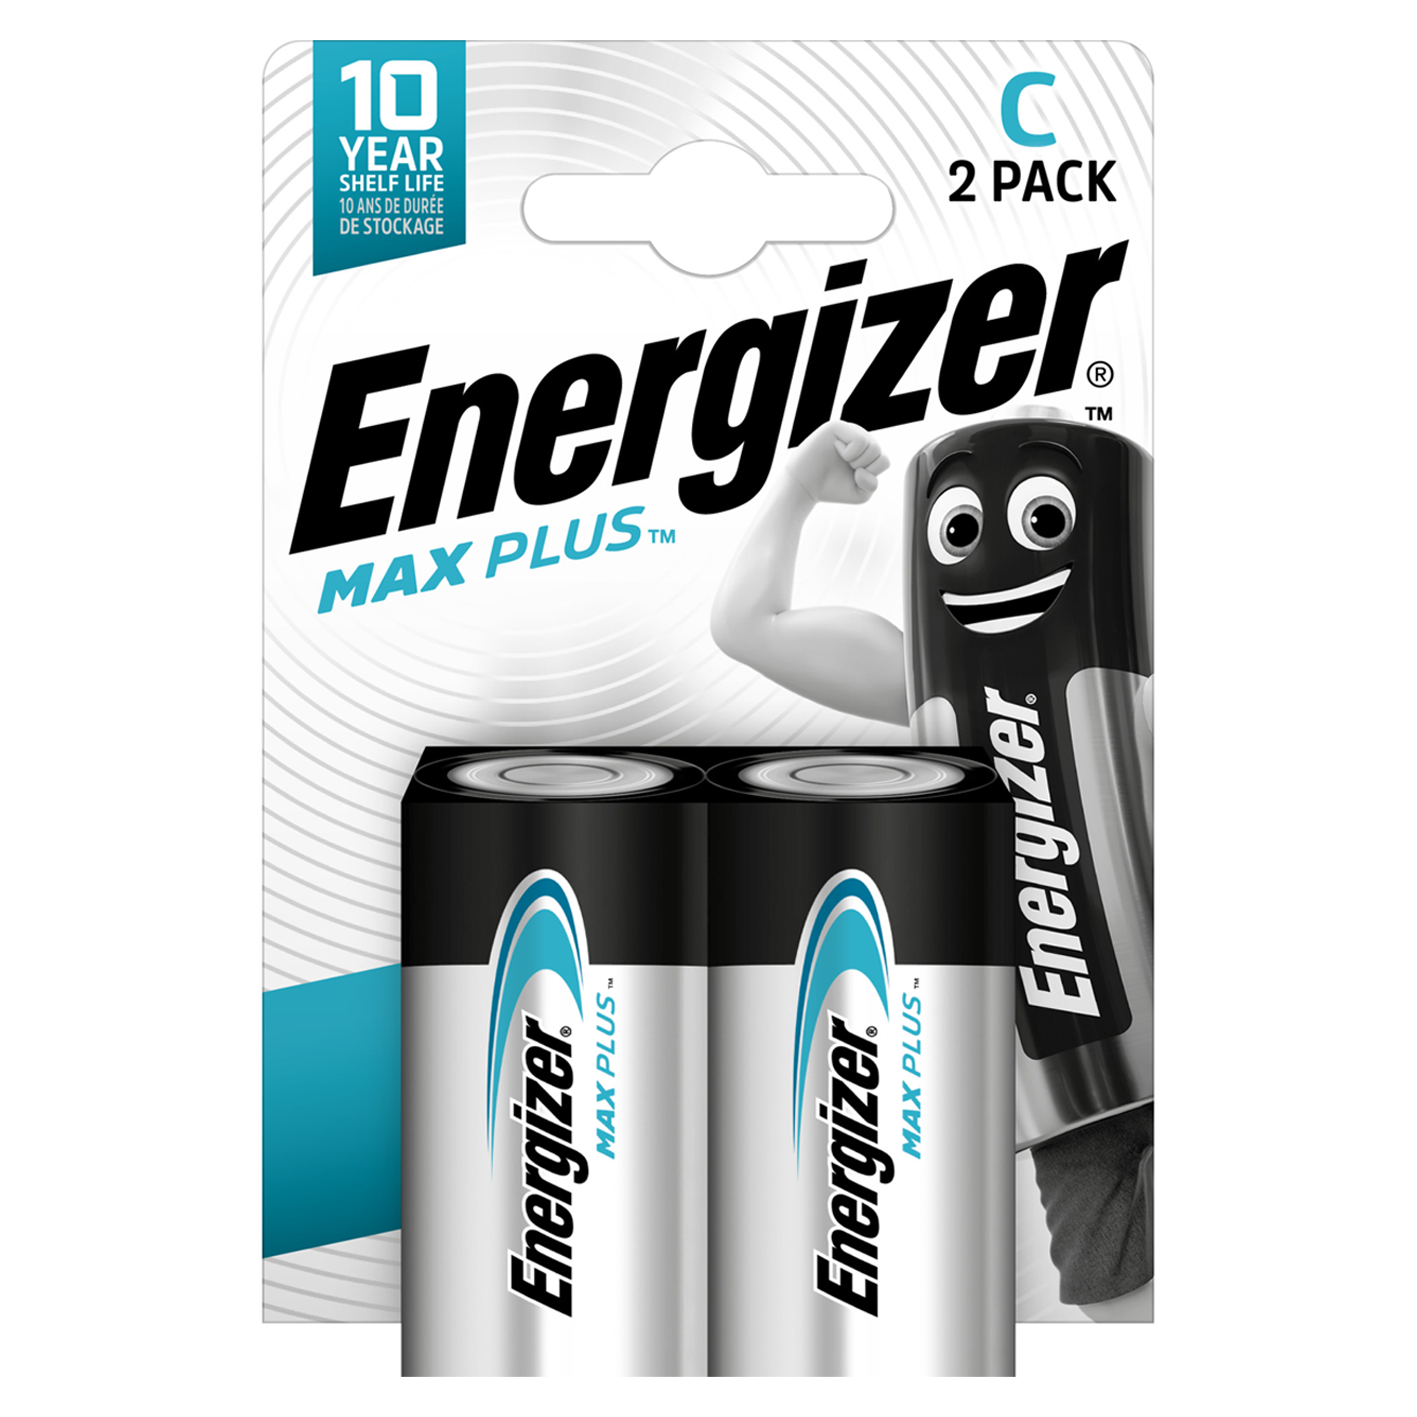 Energizer® C Size Max Plus alcalino, paquete de 2